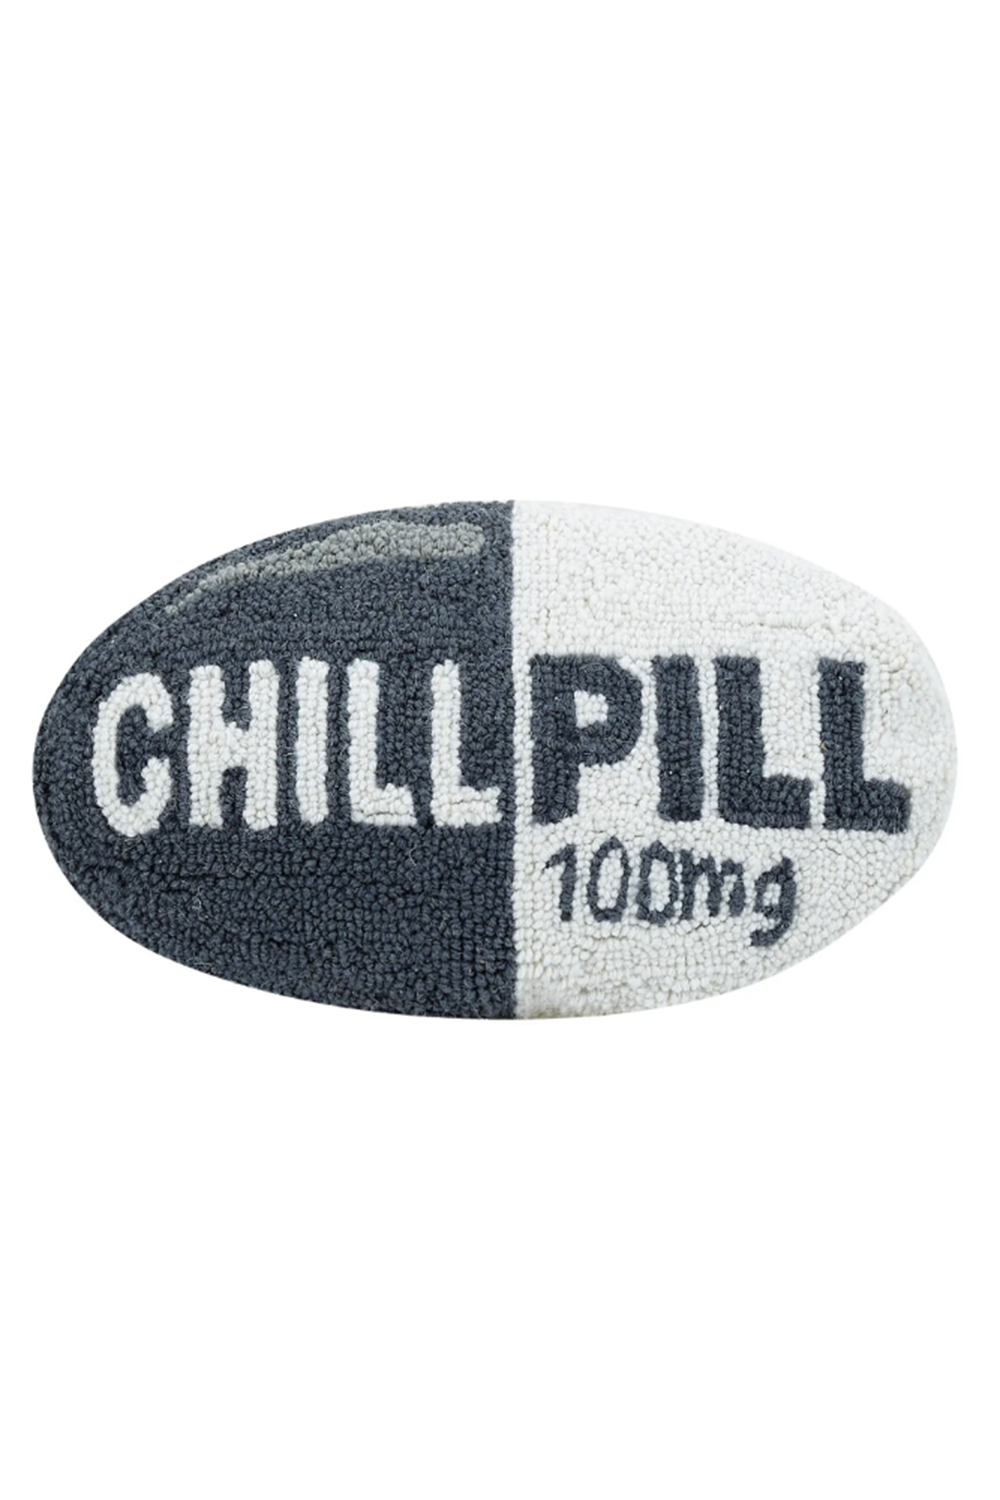 Chill Pill Hook Pillow - Dark Grey